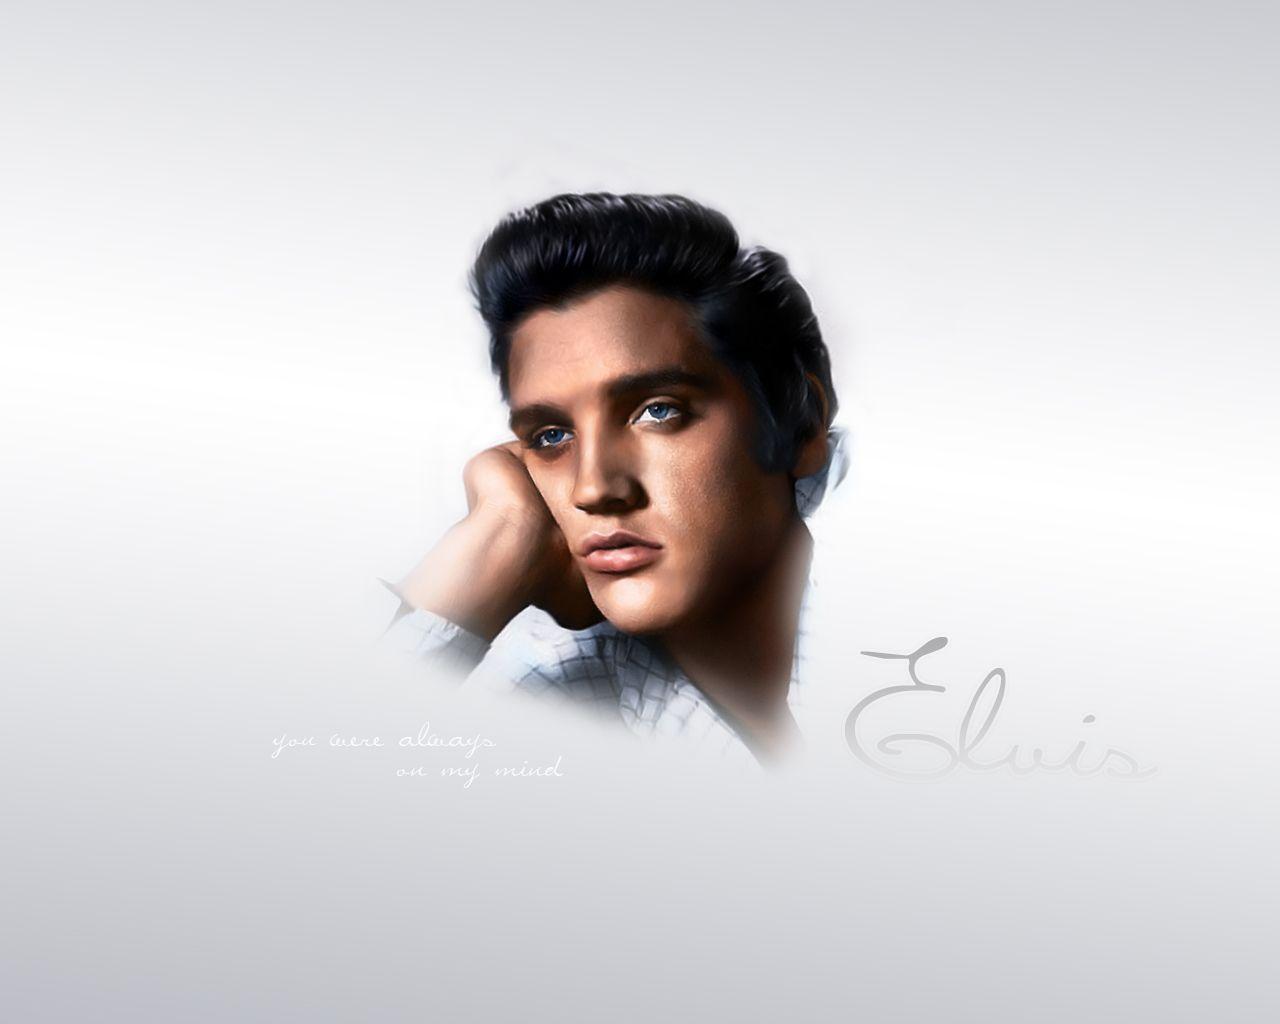 Elvis image presley presley, background